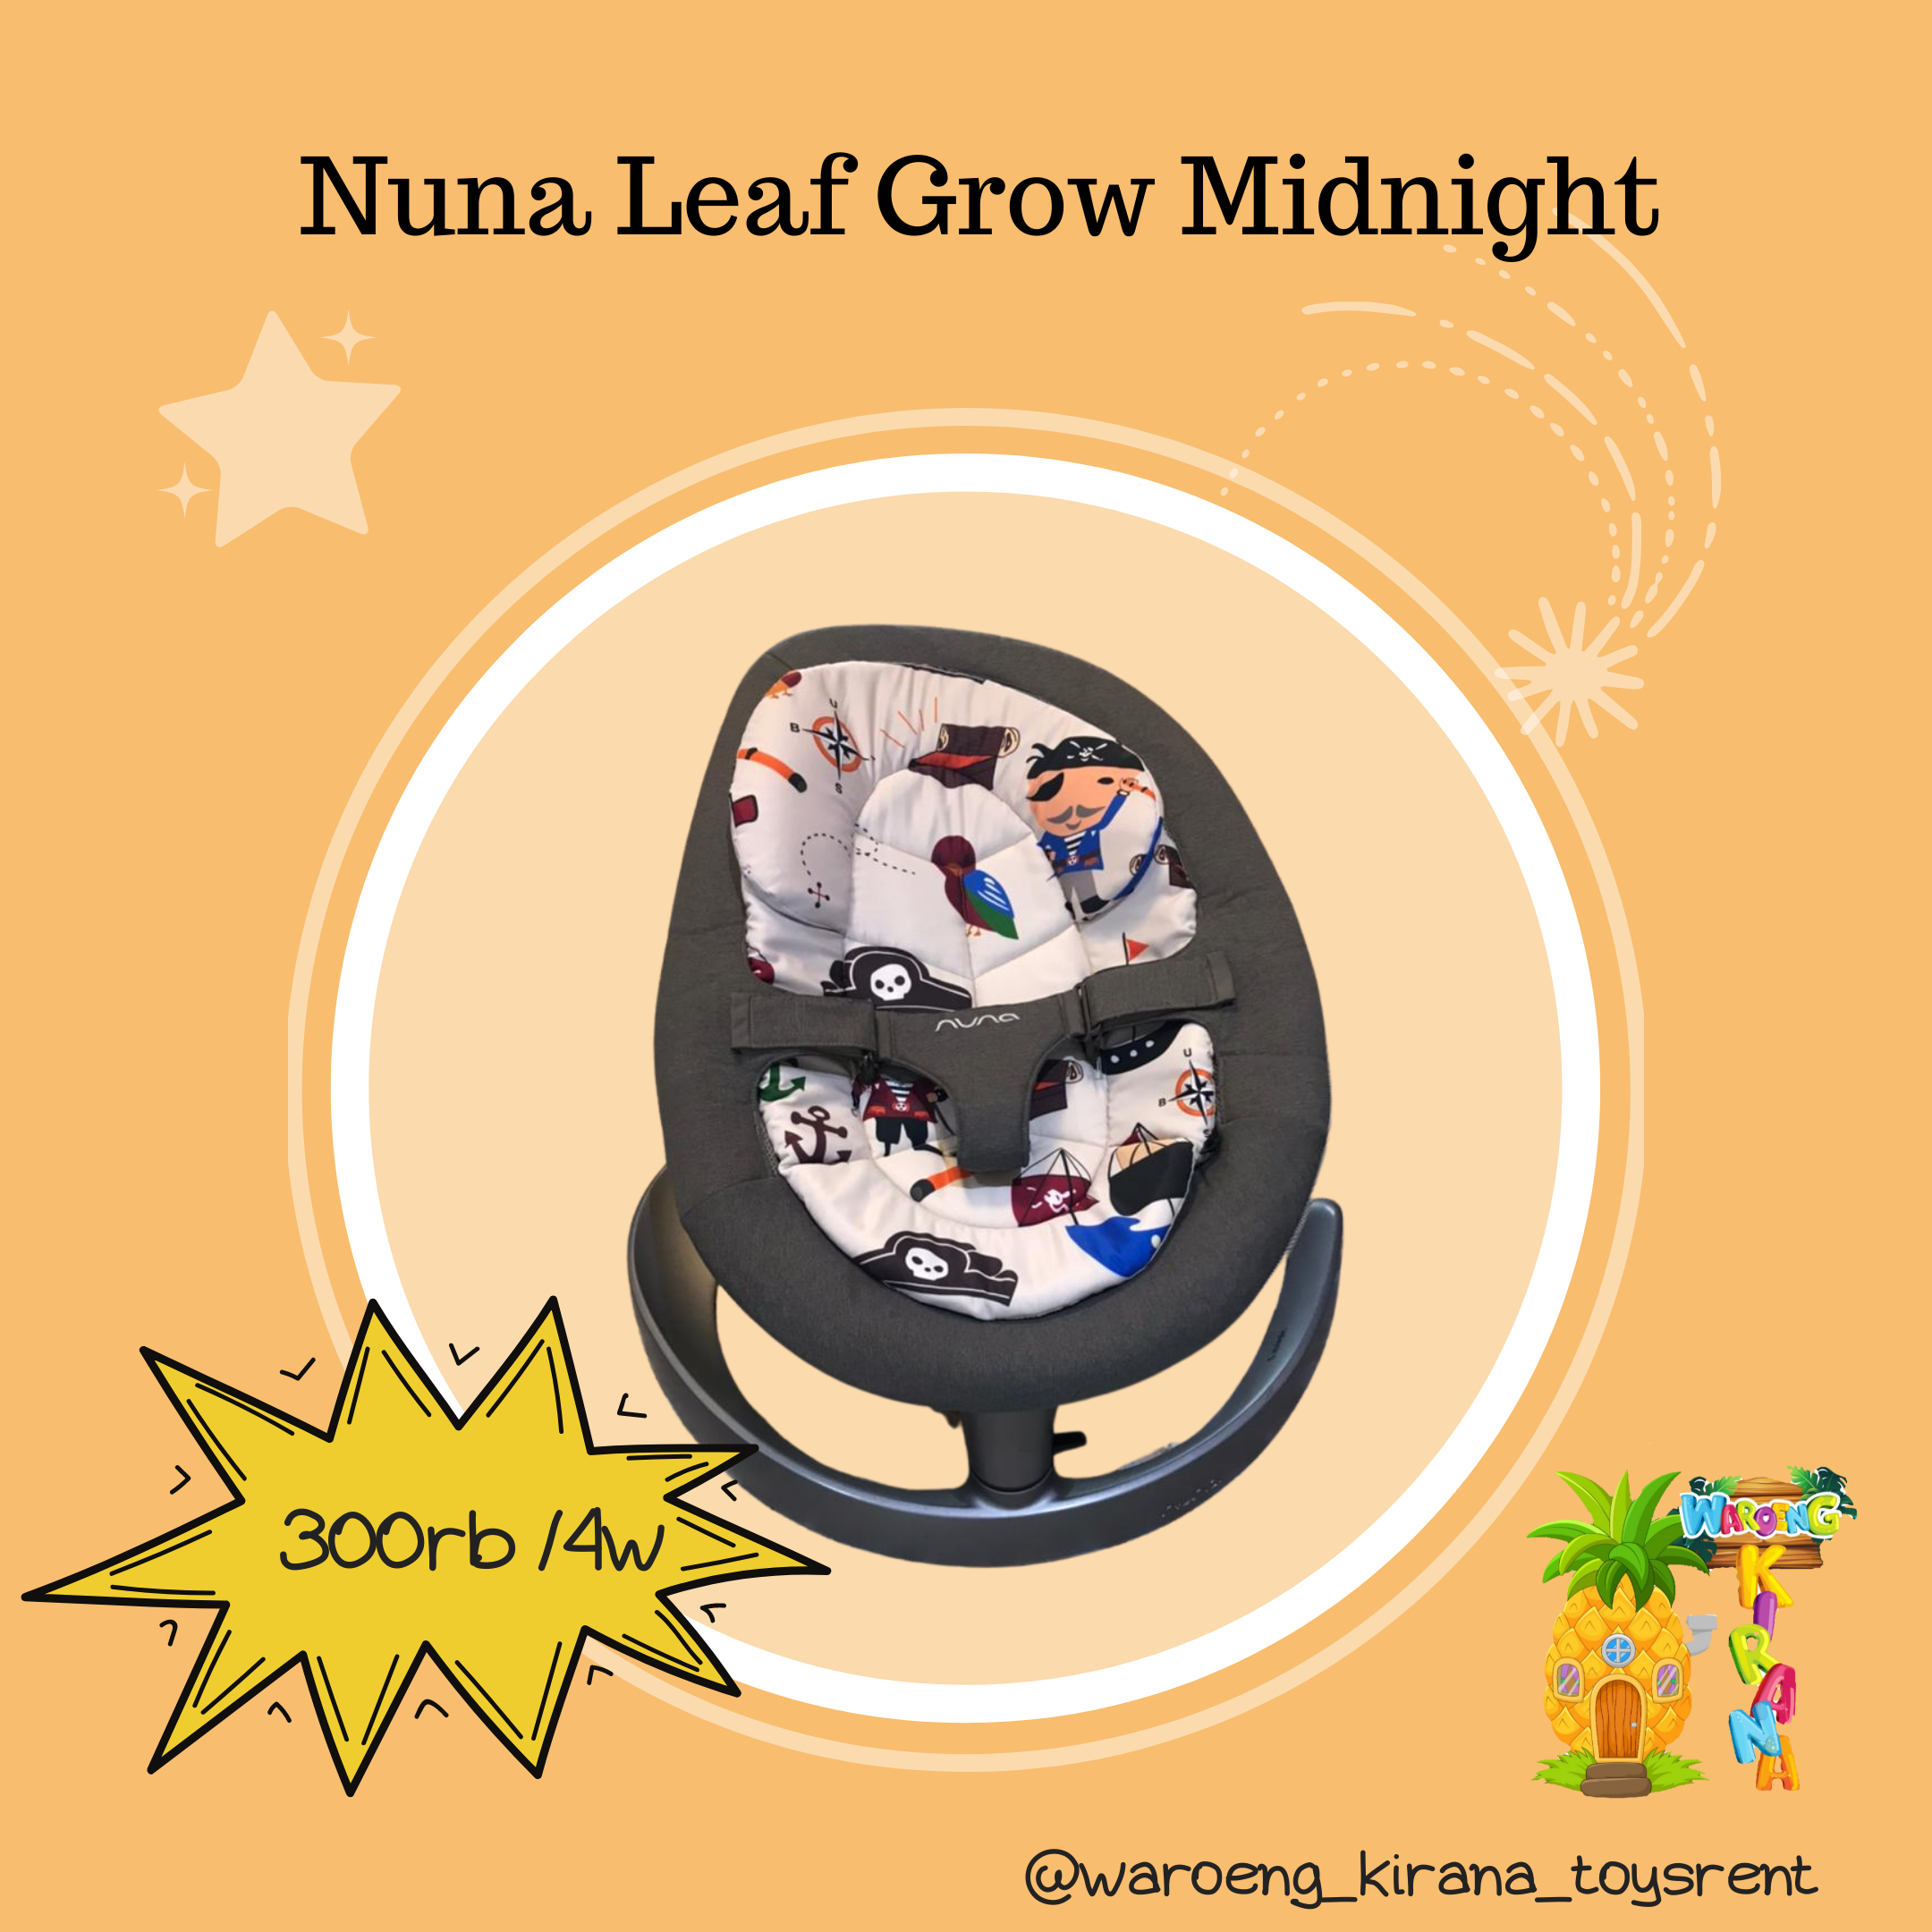 NUNA LEAF GROW MIDNIGHT